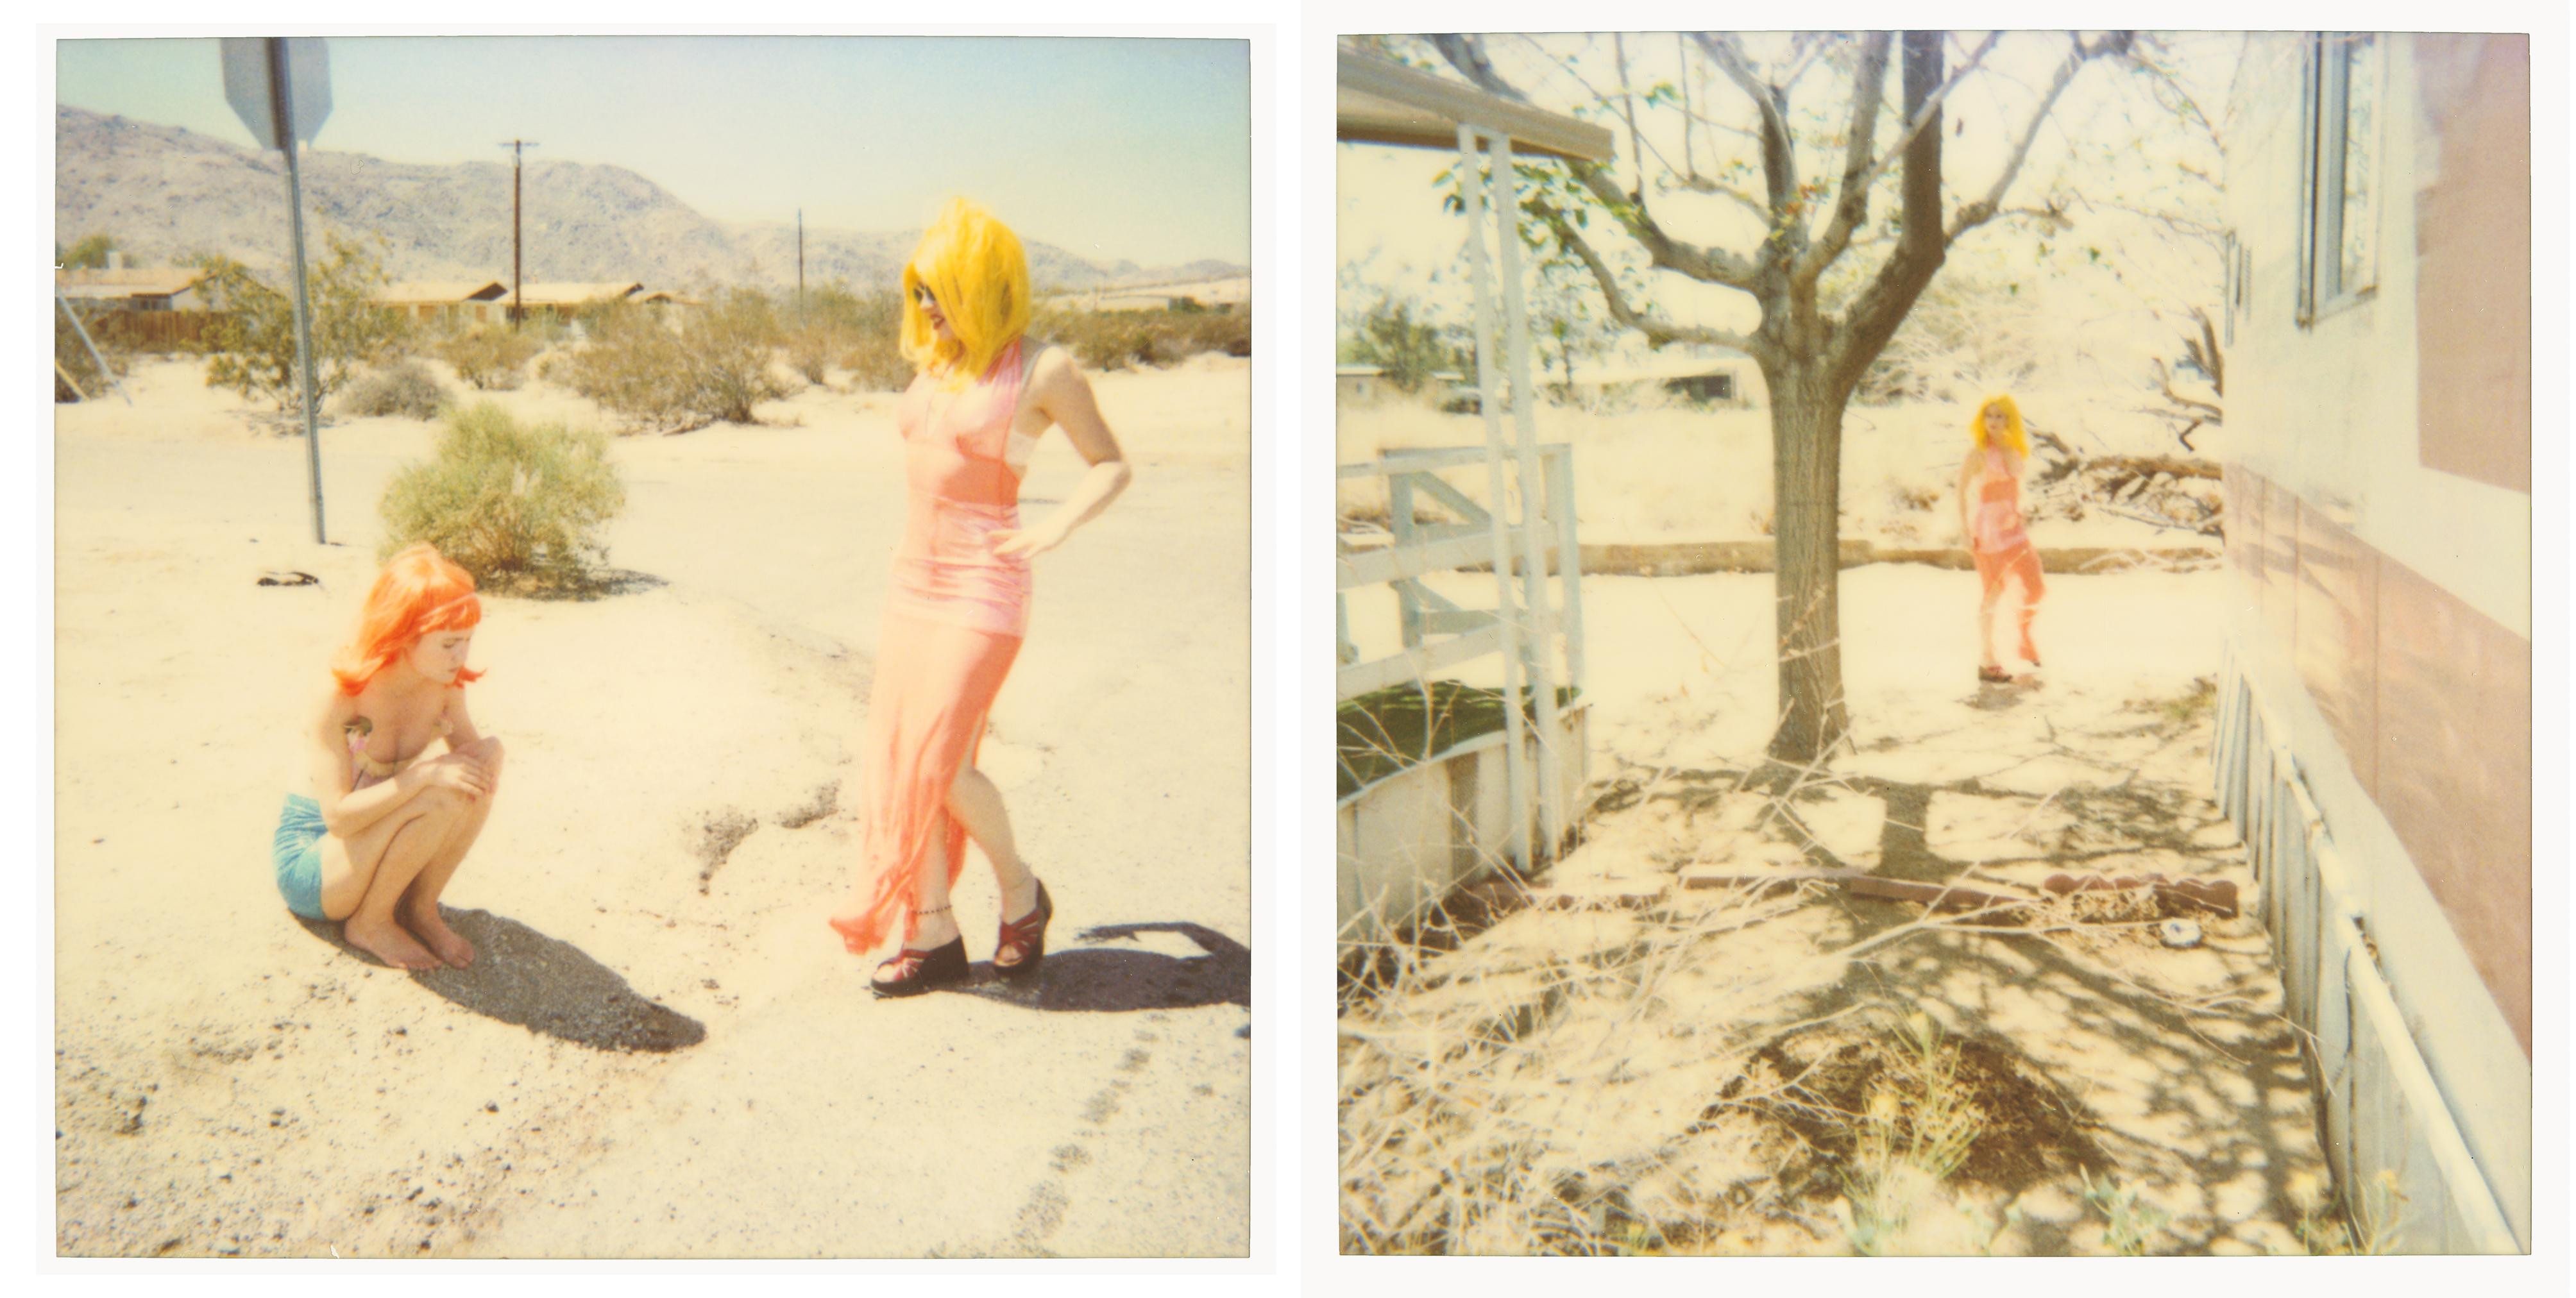 Color Photograph Stefanie Schneider - Radha and Max on Dirt Road (29 Palms, CA) - analogue, Polaroid, contemporain